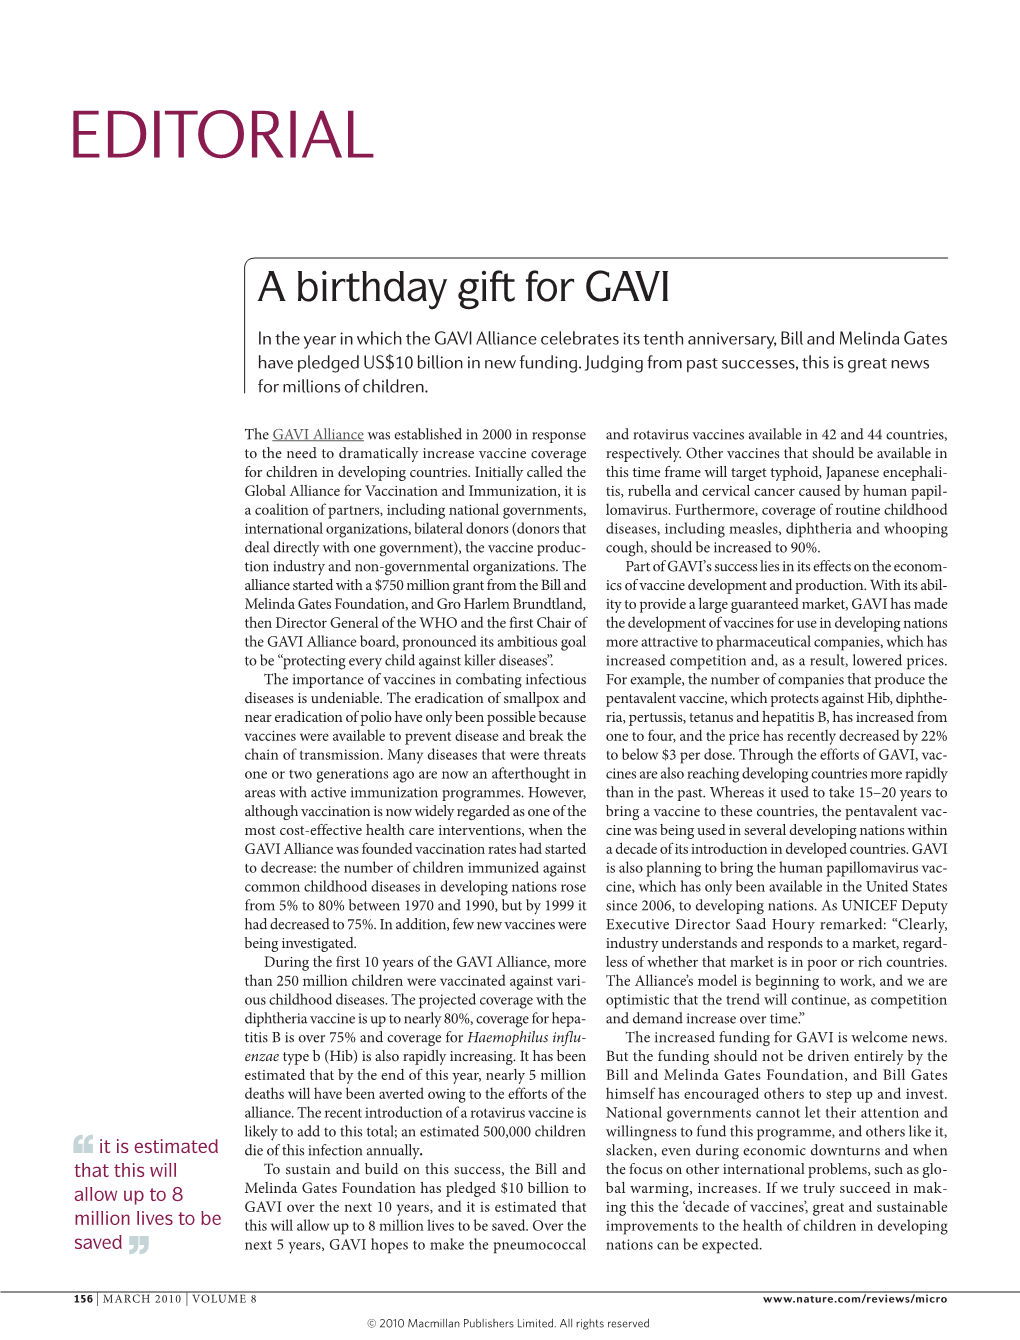 A Birthday Gift for GAVI